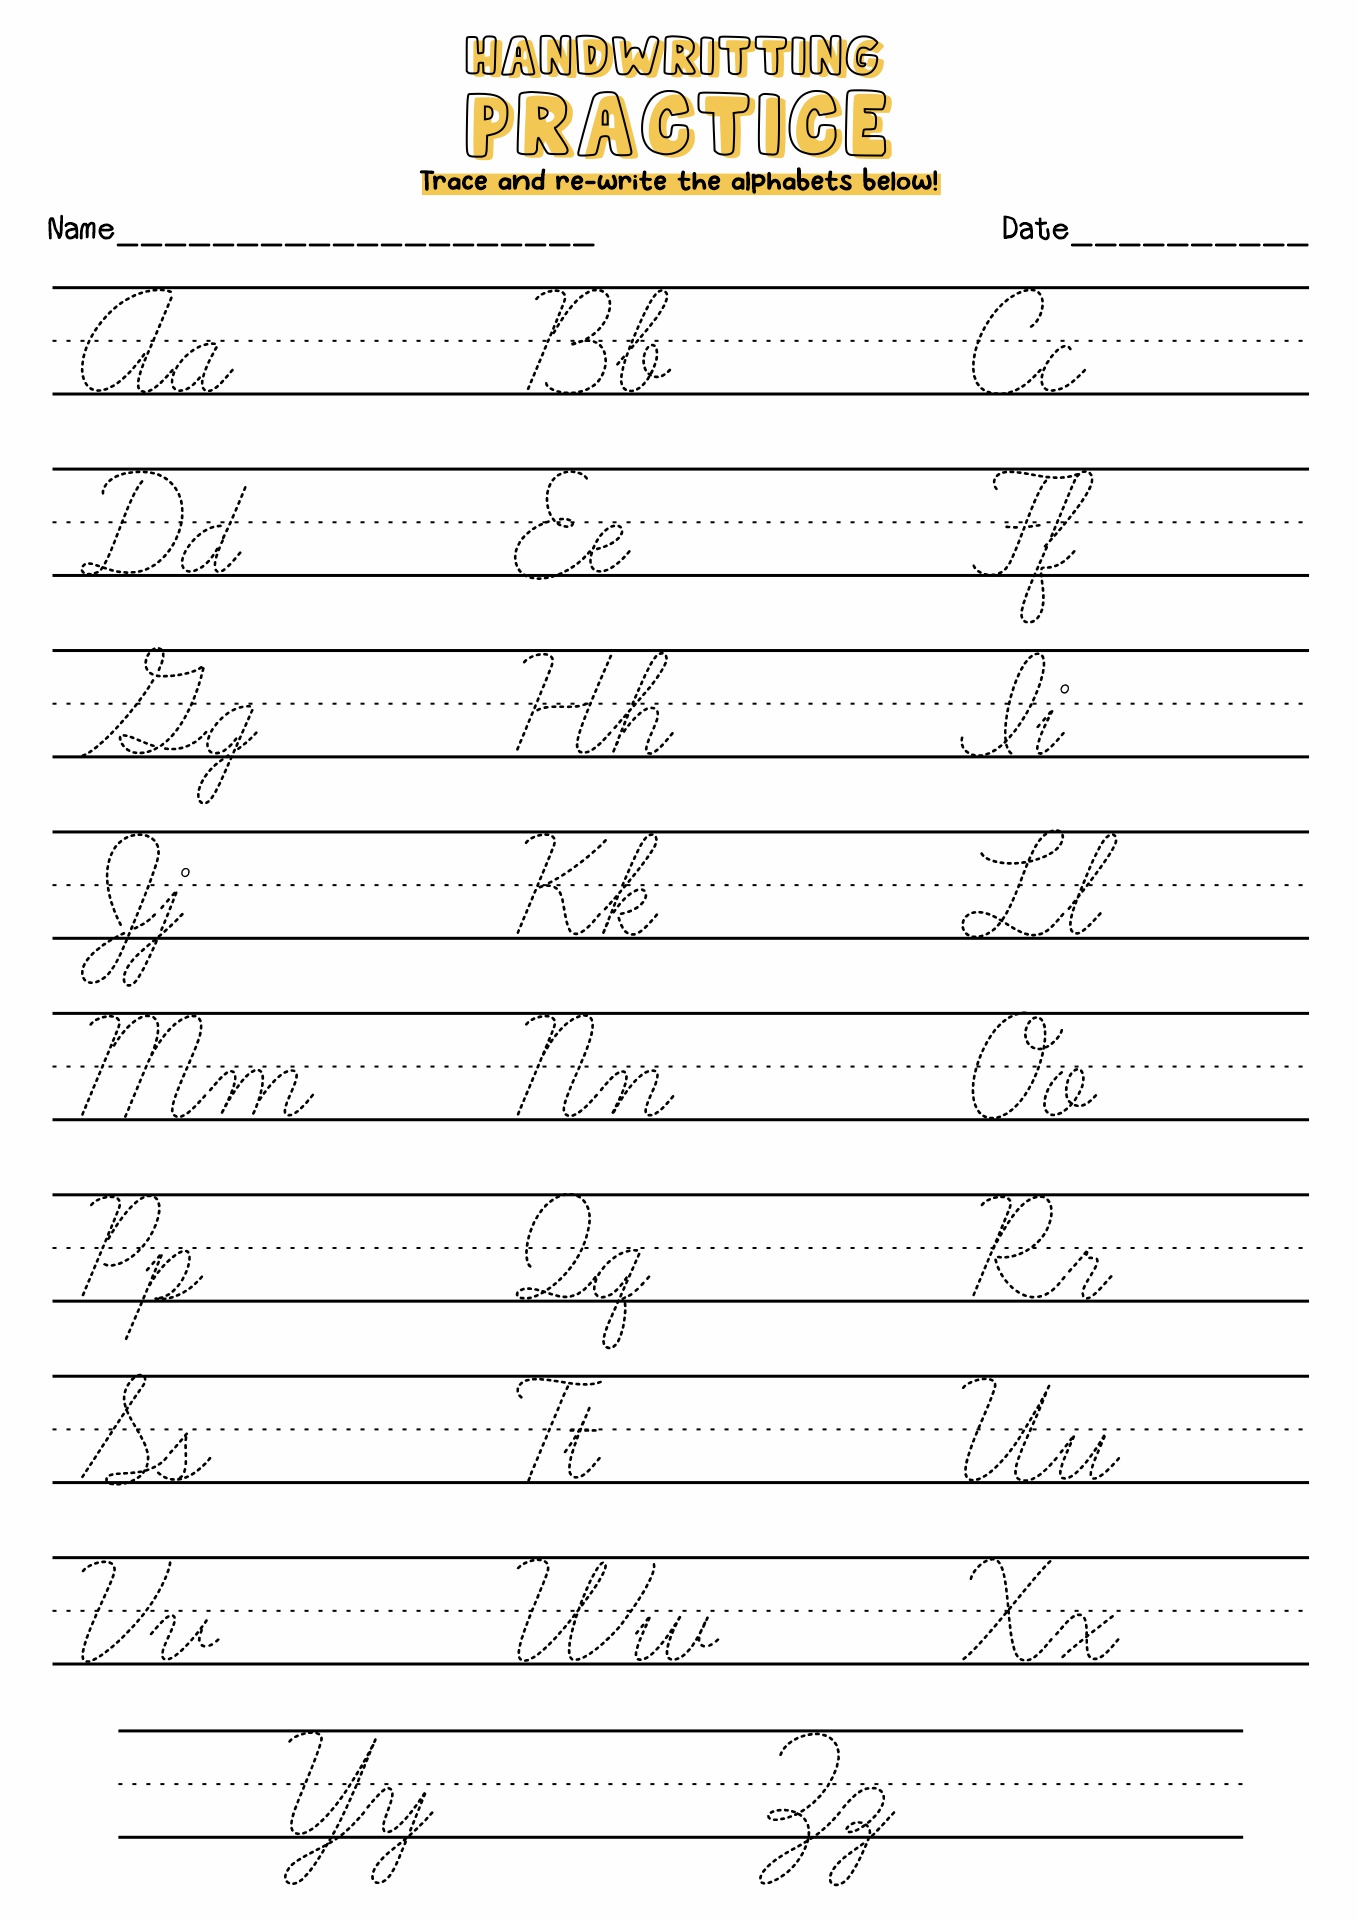 14 Practice Writing Alphabet Letter Worksheets - Free PDF at worksheeto.com